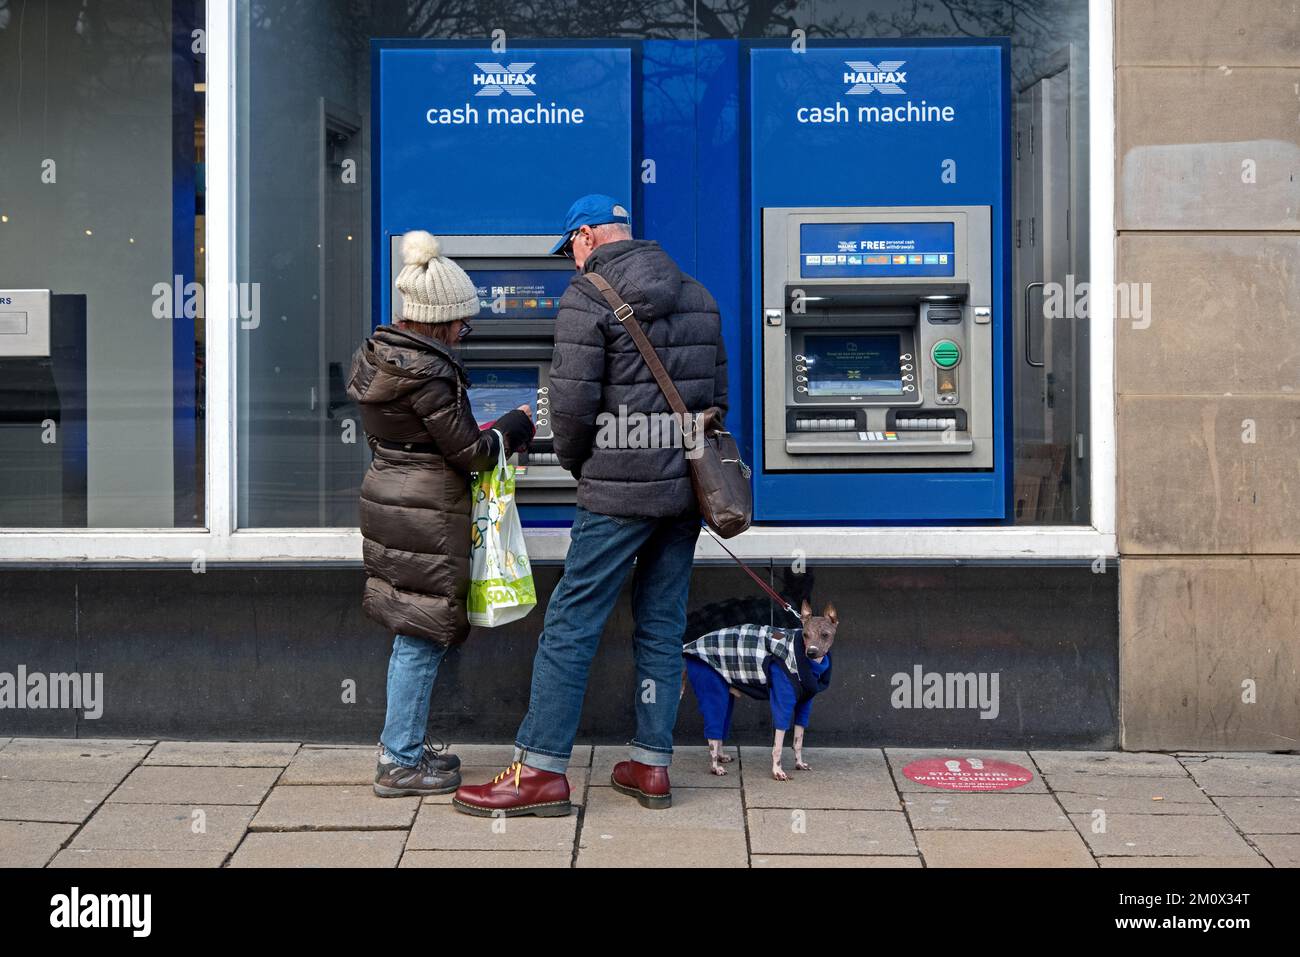 Couple with a dog wearing a coat at a Halifax Bank cash machine on Princes Street, Edinburgh, Scotland, UK. Stock Photo